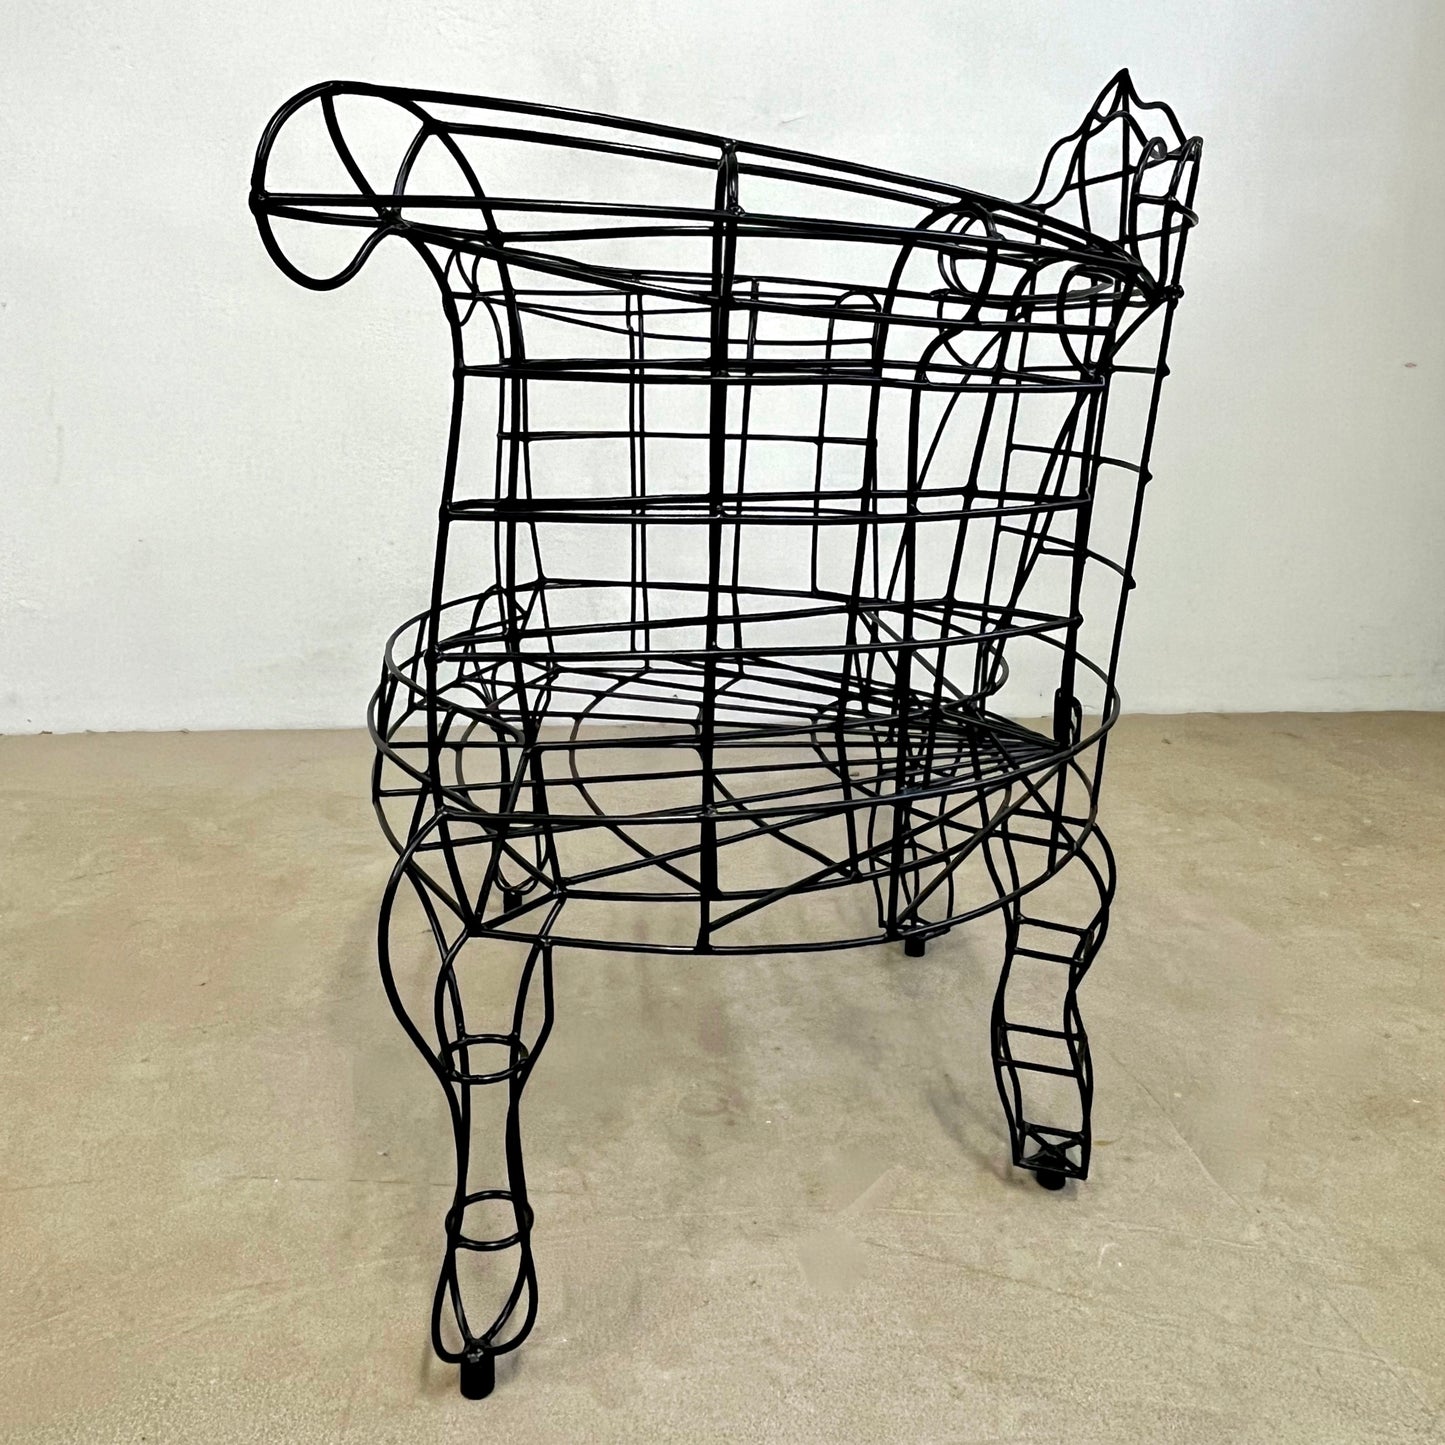 Spazzapan Italian Post-Modern Pop Art Black Metal Armchair And Fabric Seat Cover